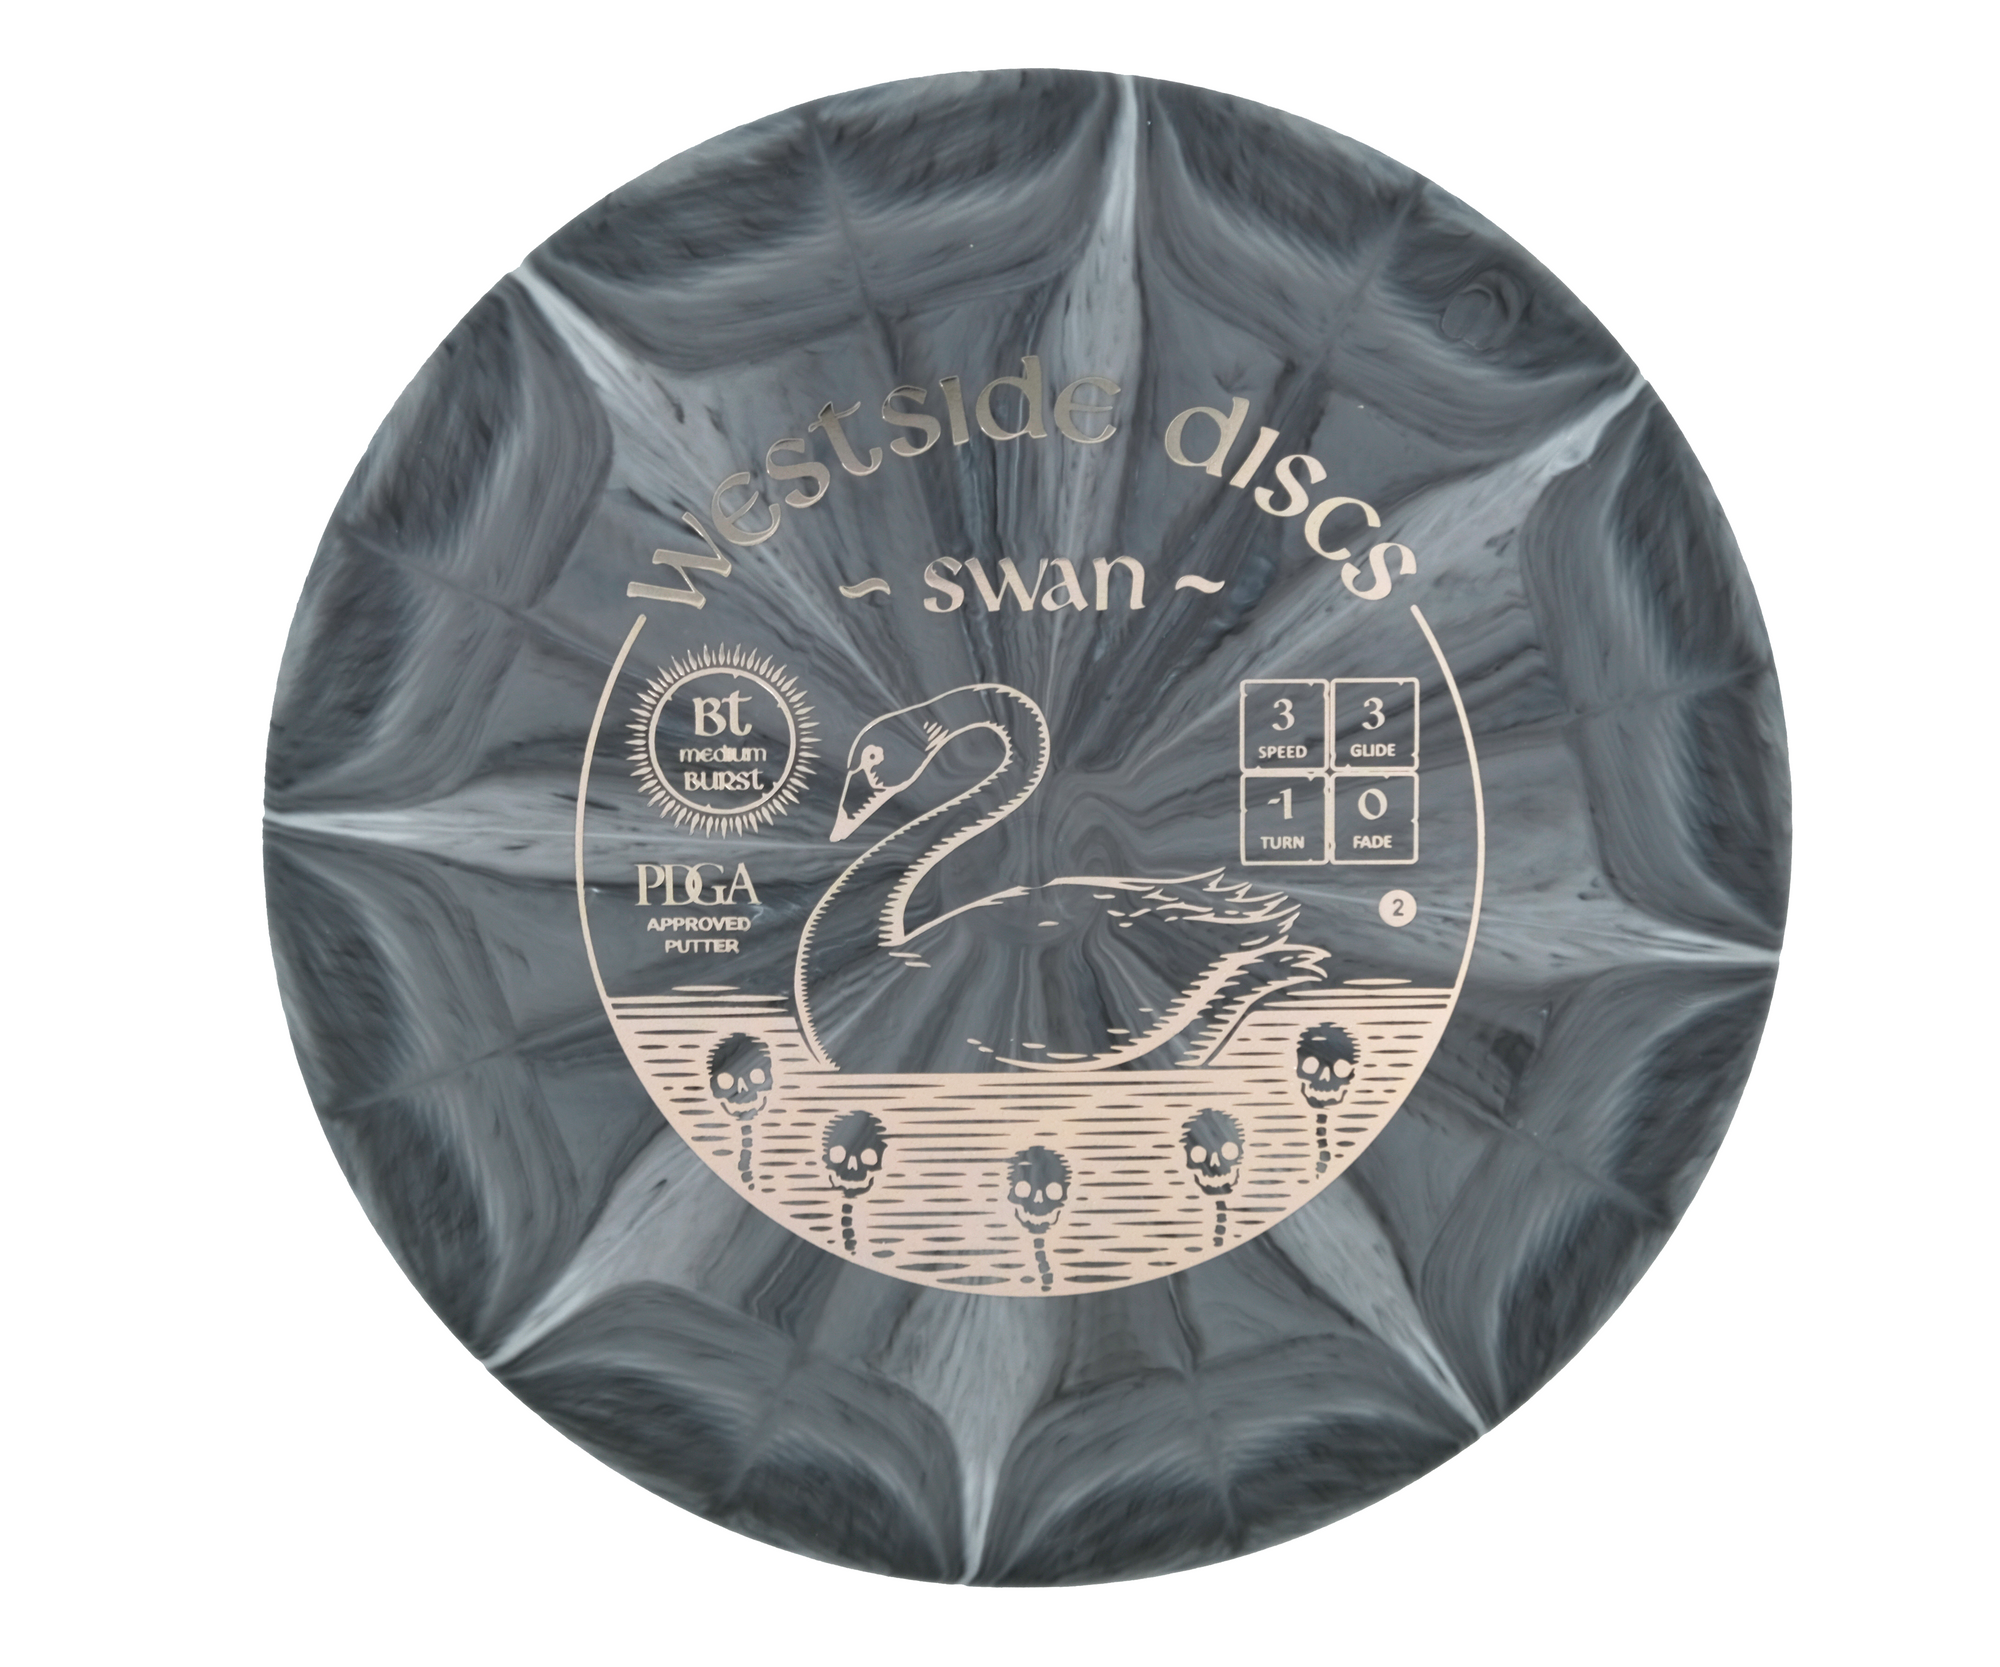 Westside Discs Bt Medium Swan 2 (173g)